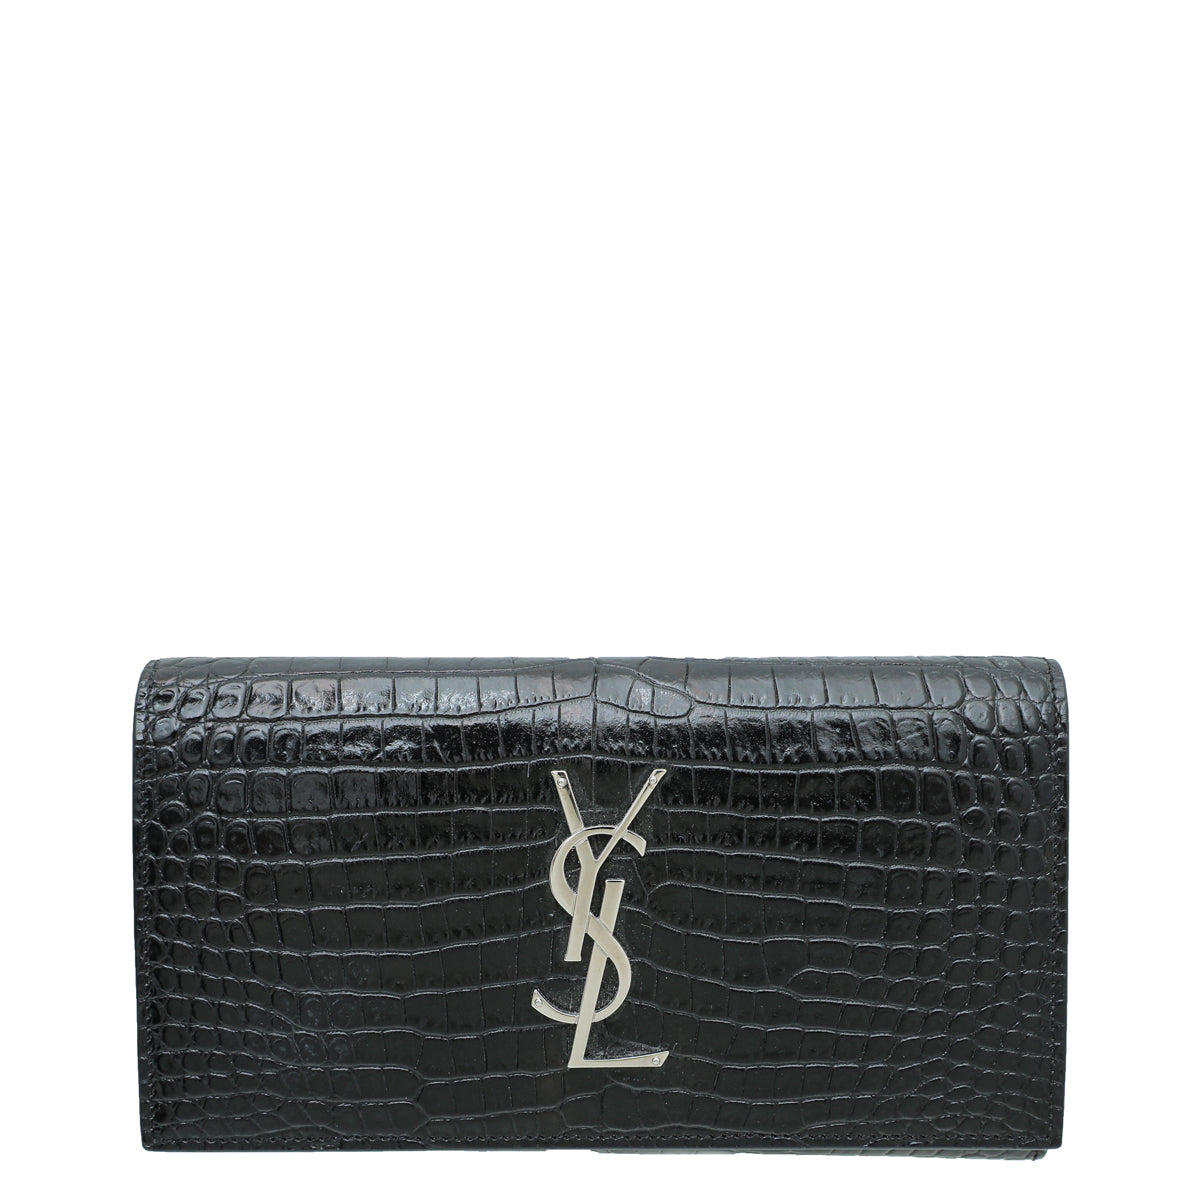 YSL Black Croc Embossed Continental Wallet